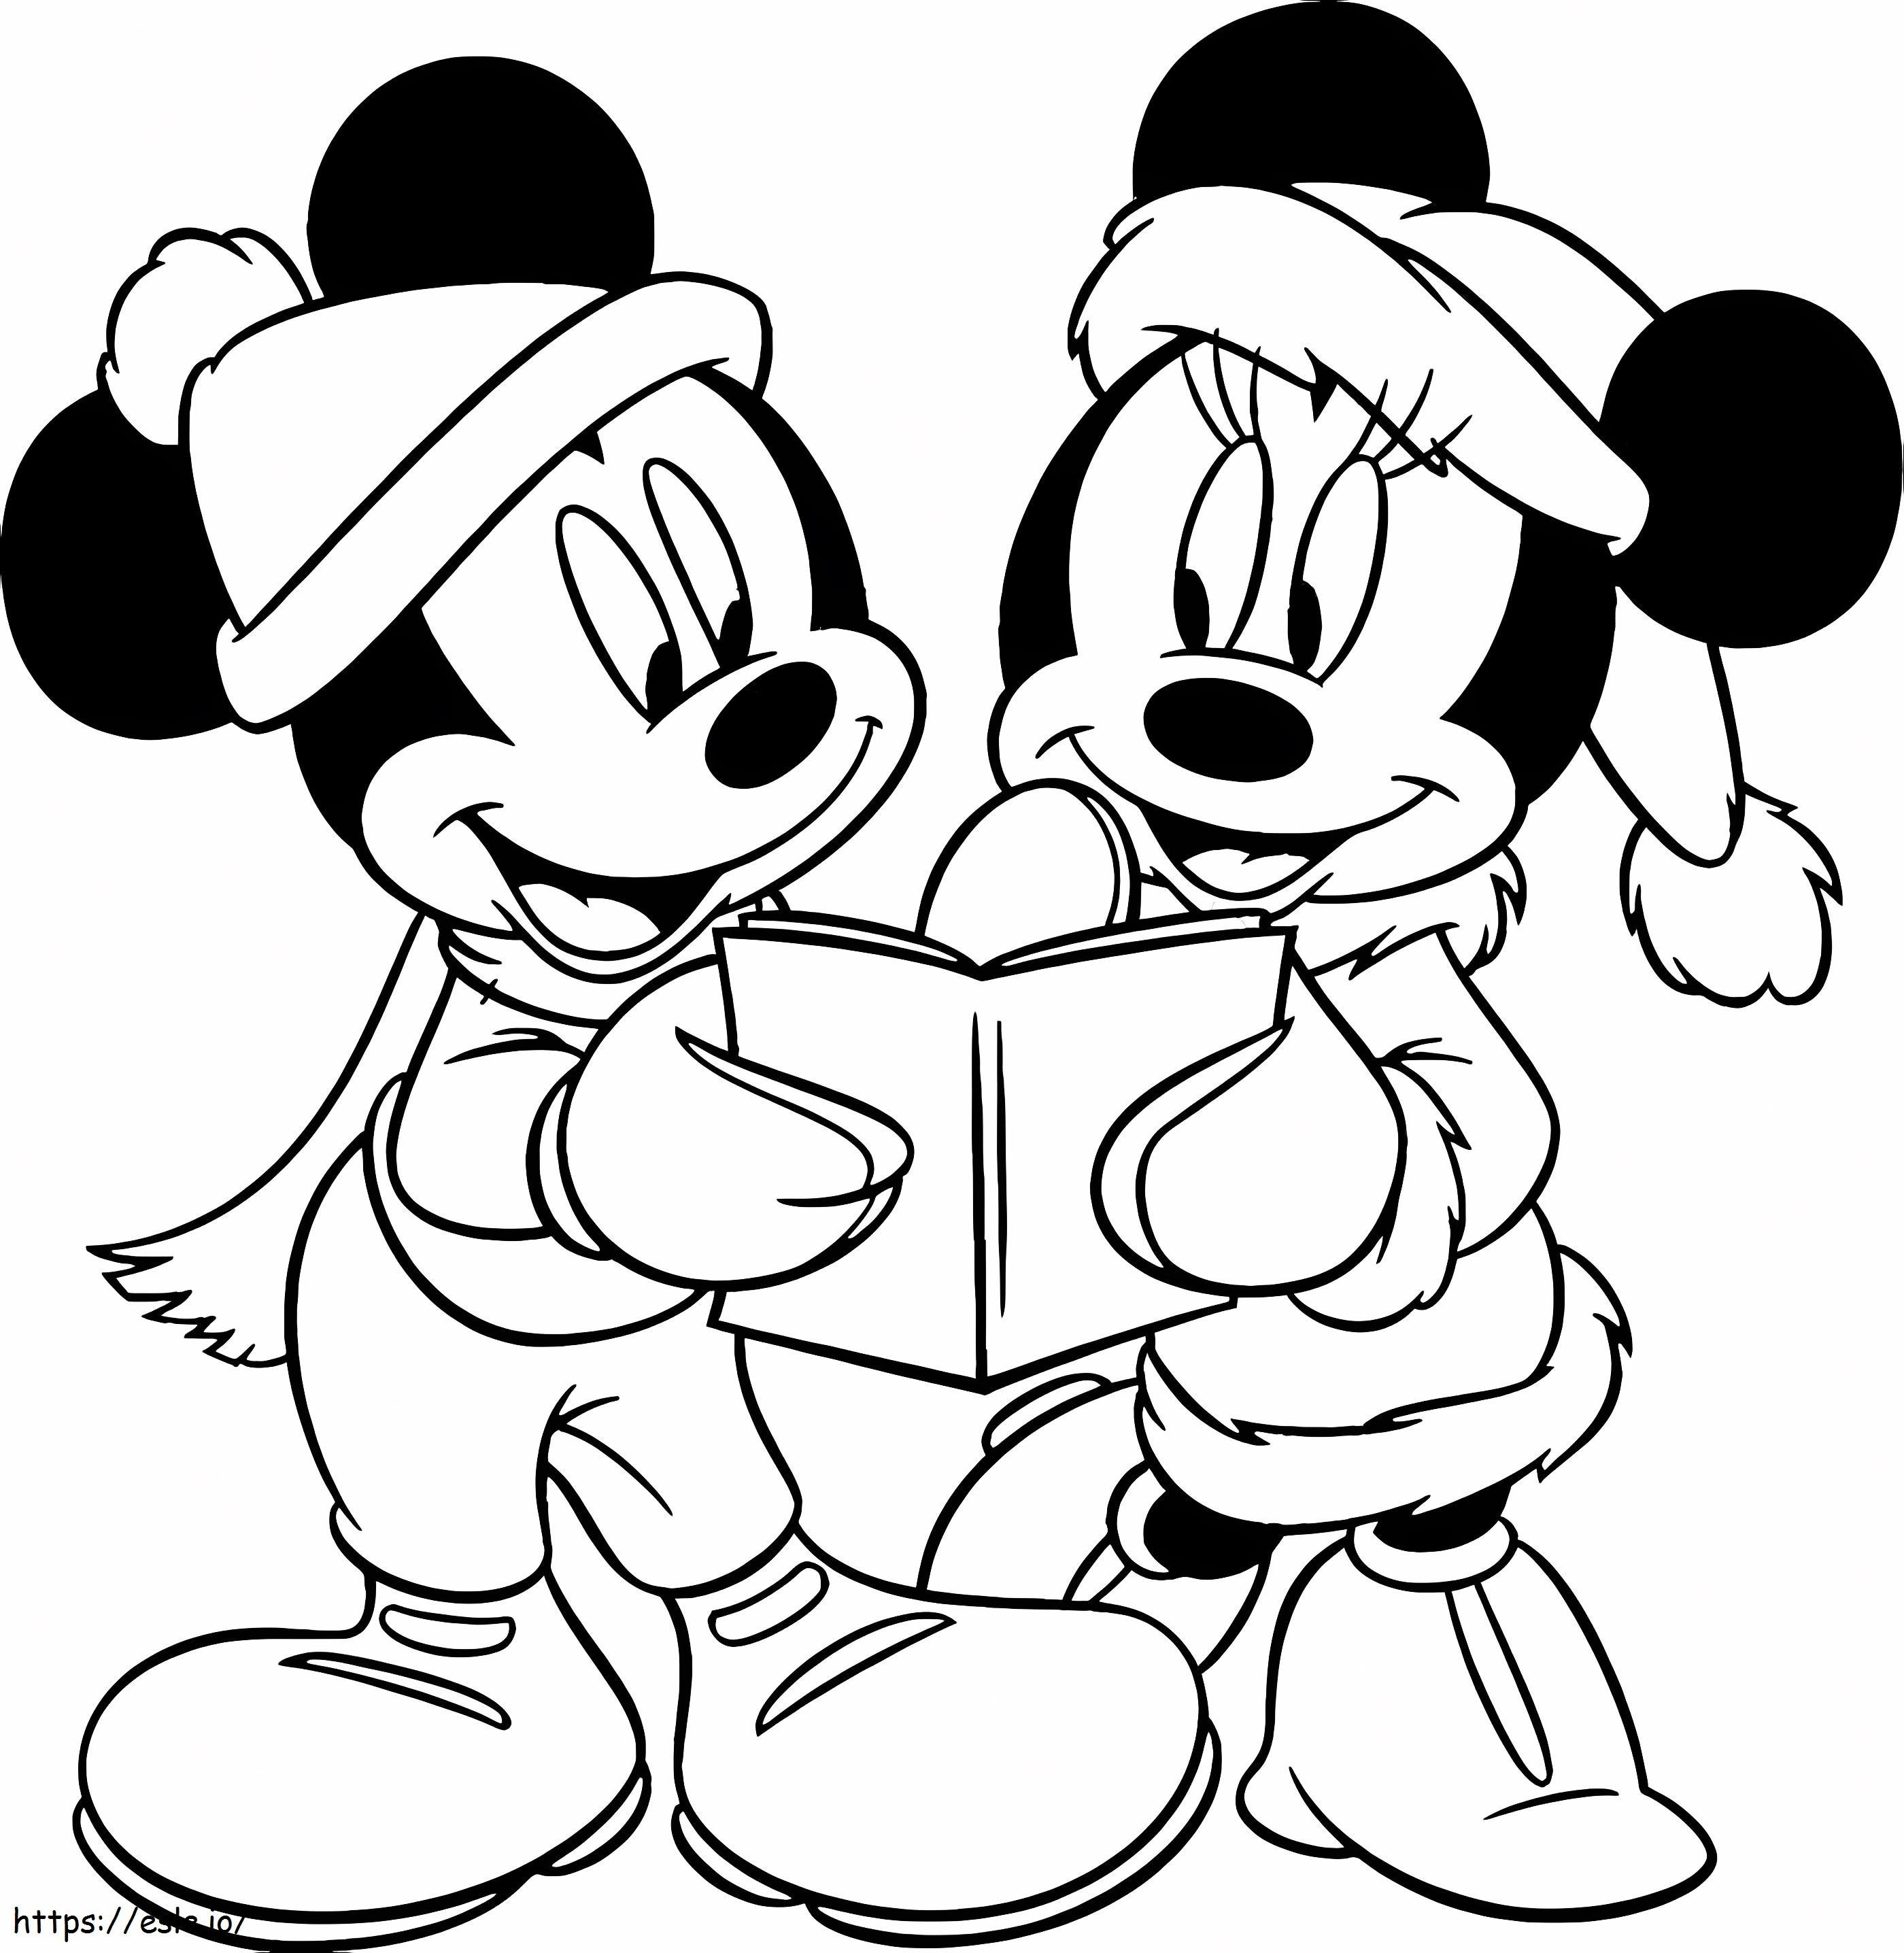 Livro de leitura do Mickey Mouse e da Minnie Mouse para colorir